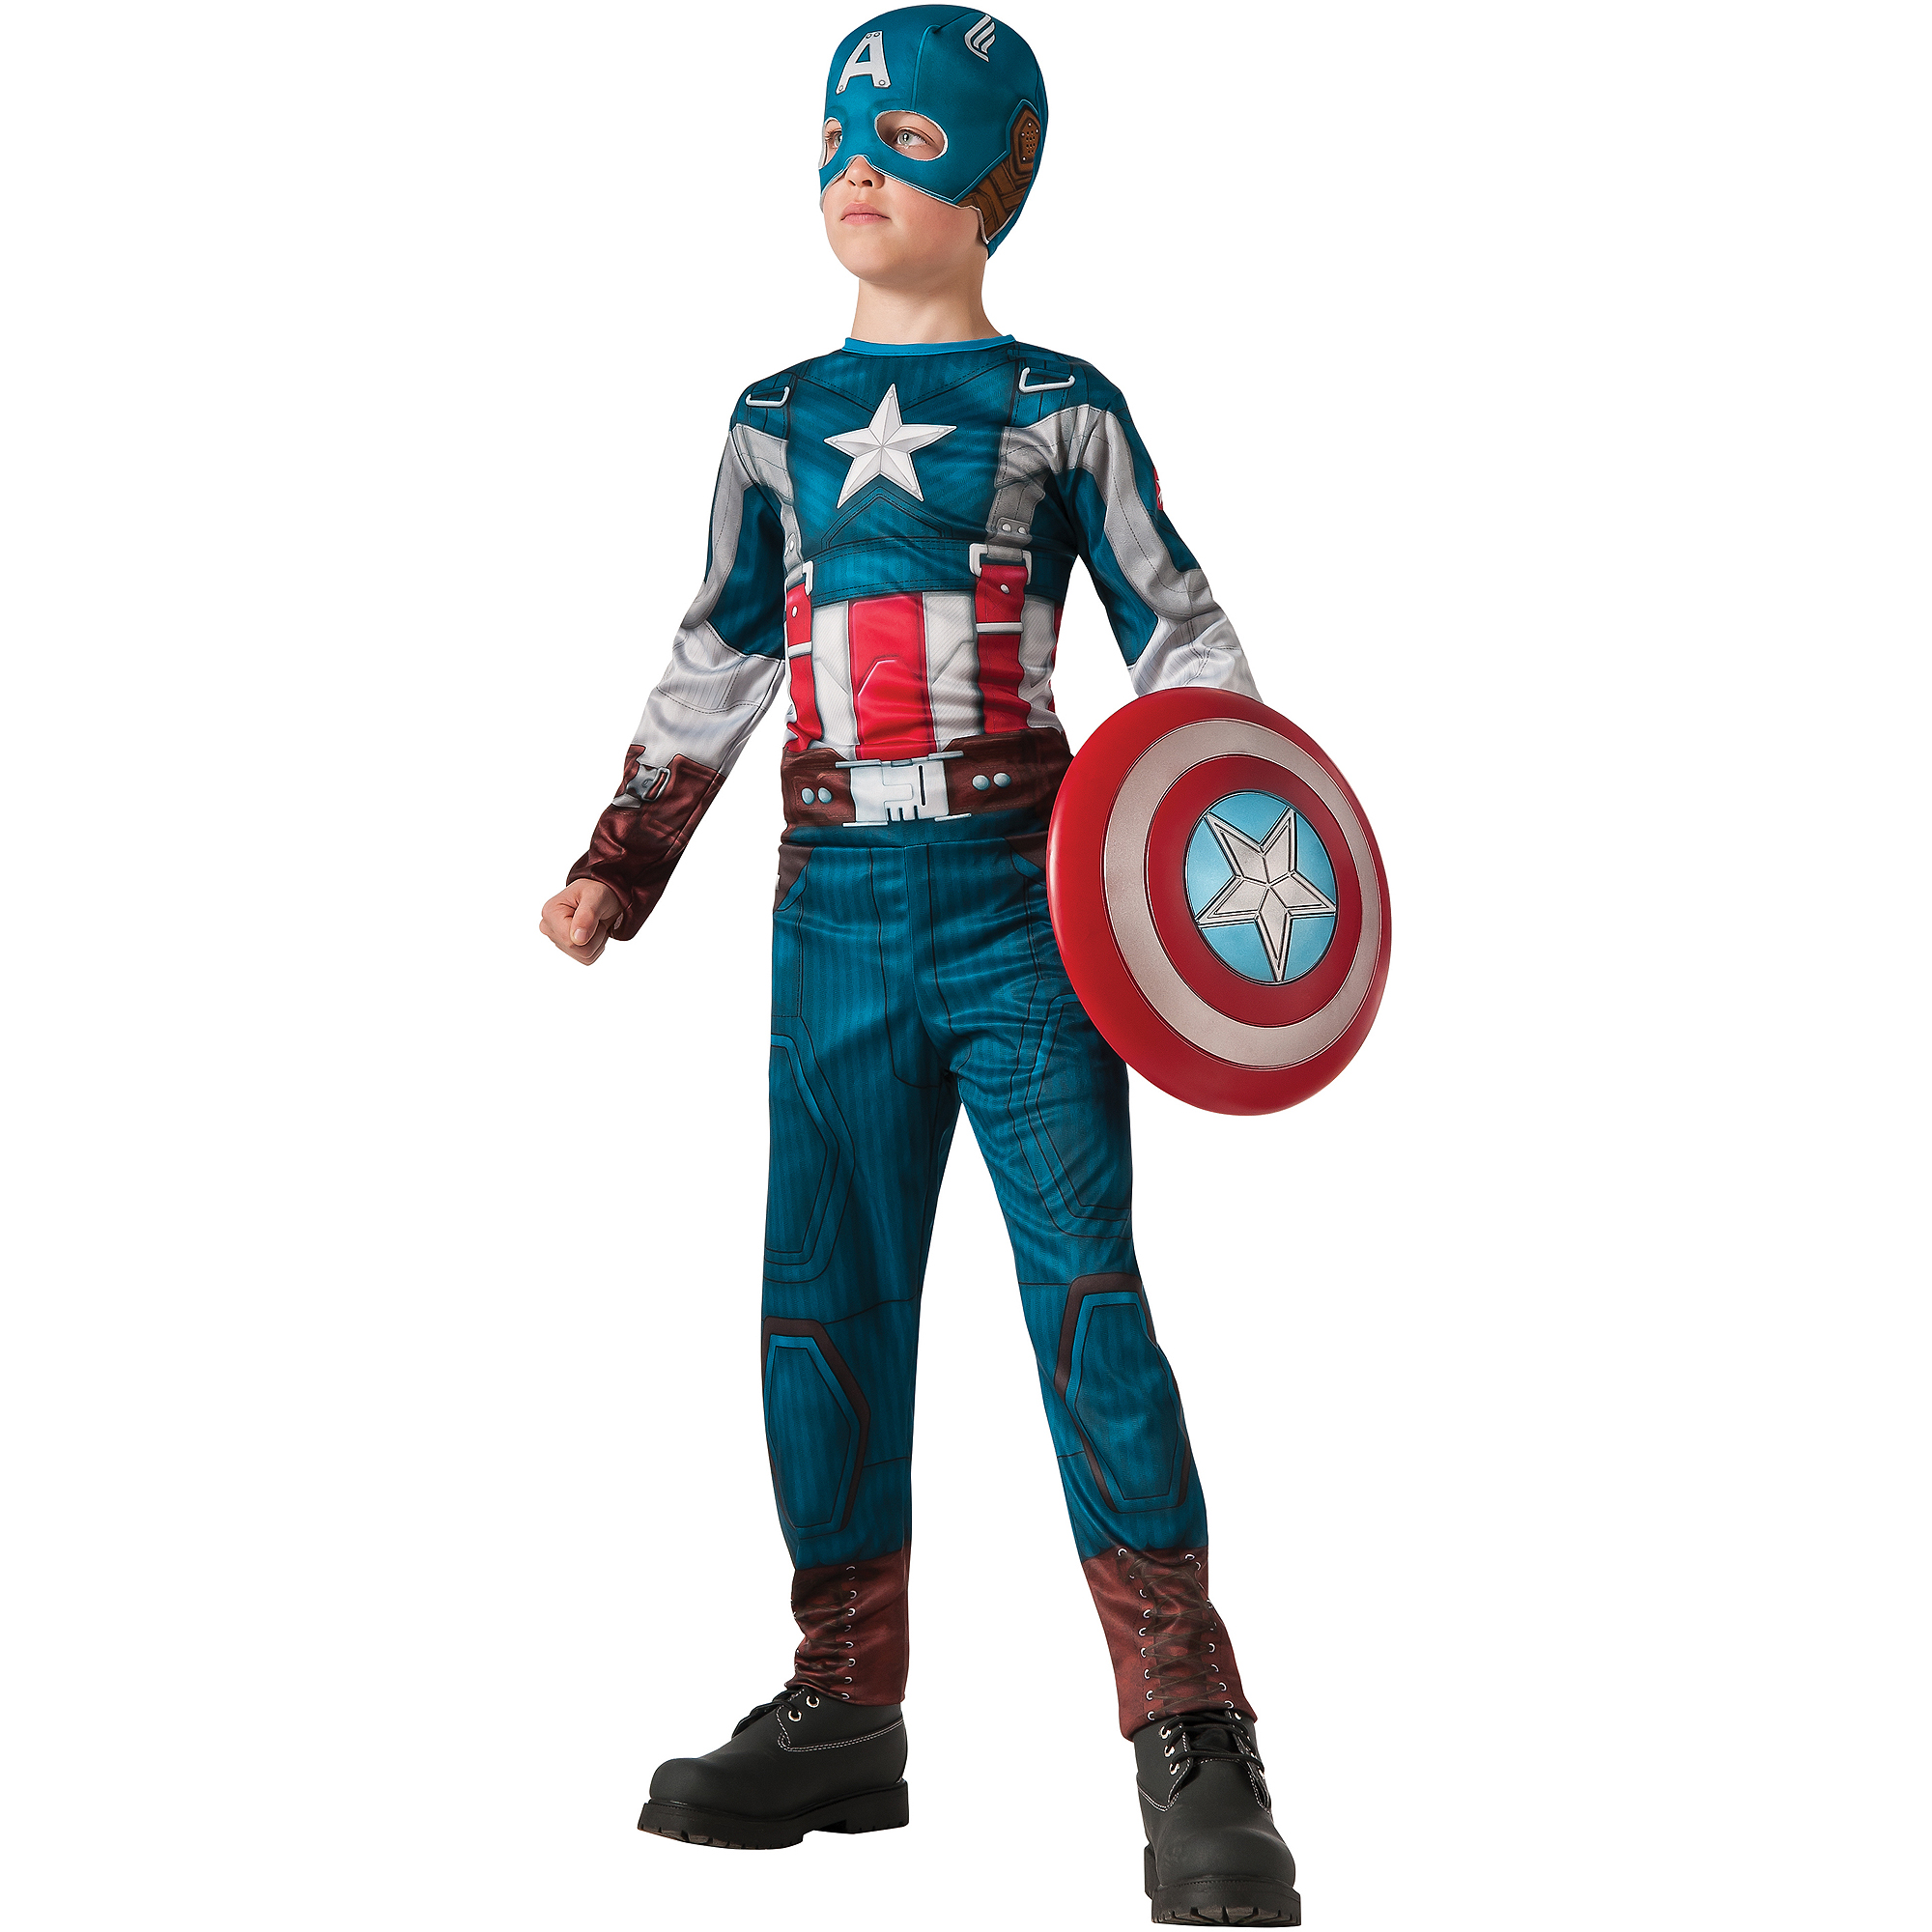 Captain America 2 Retro Classic Child Halloween Costume - image 1 of 4